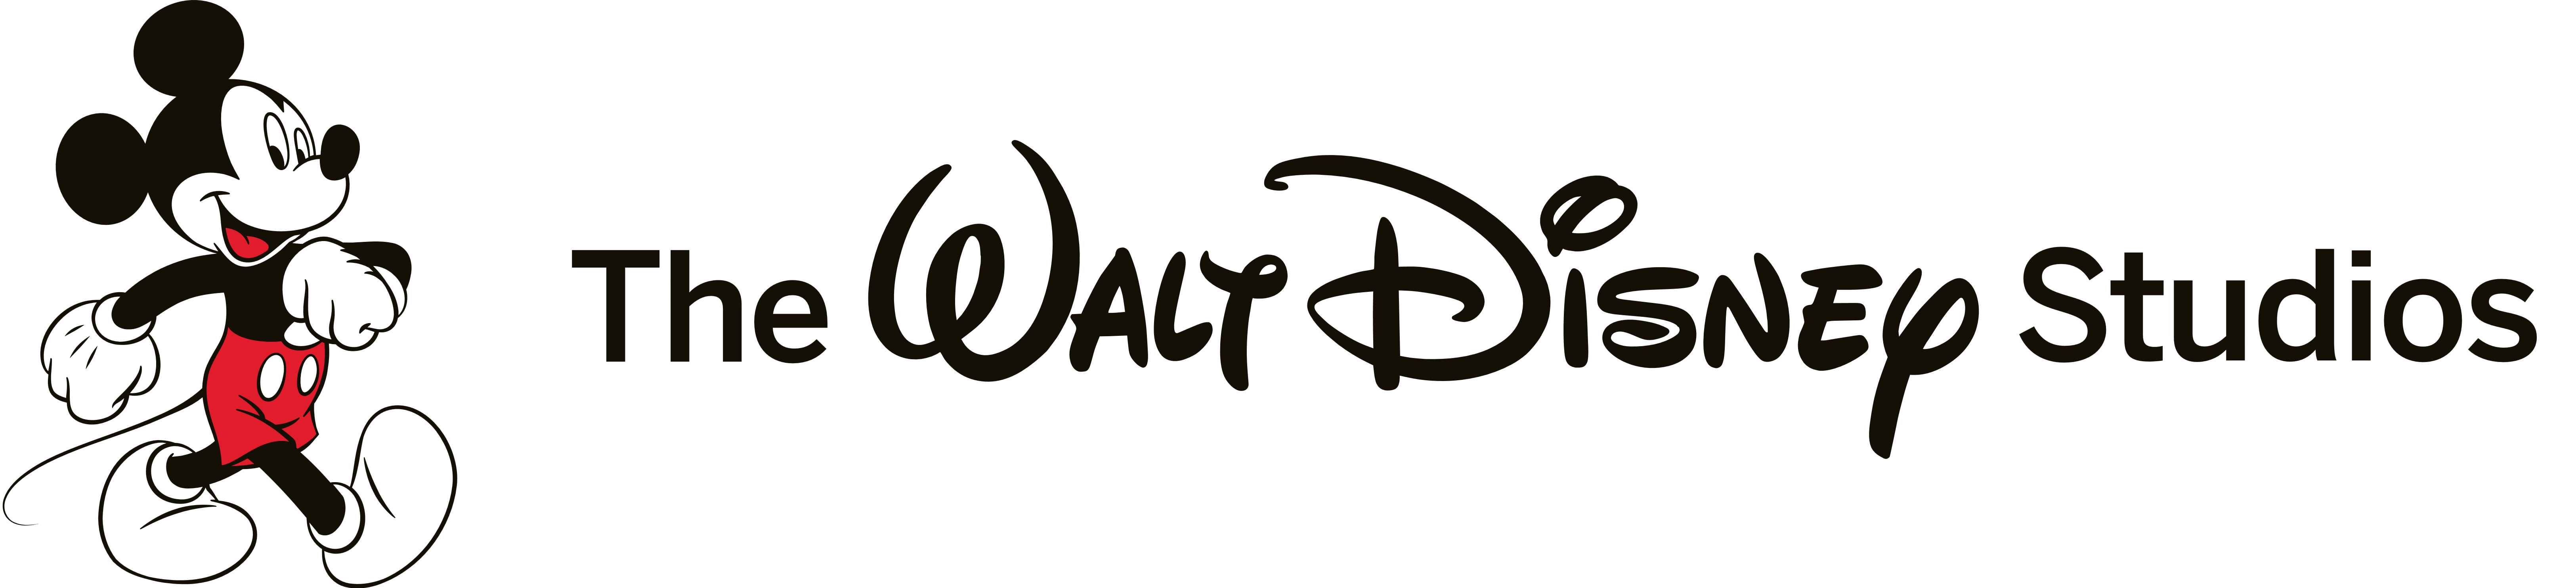 The Walt Disney Company Logos